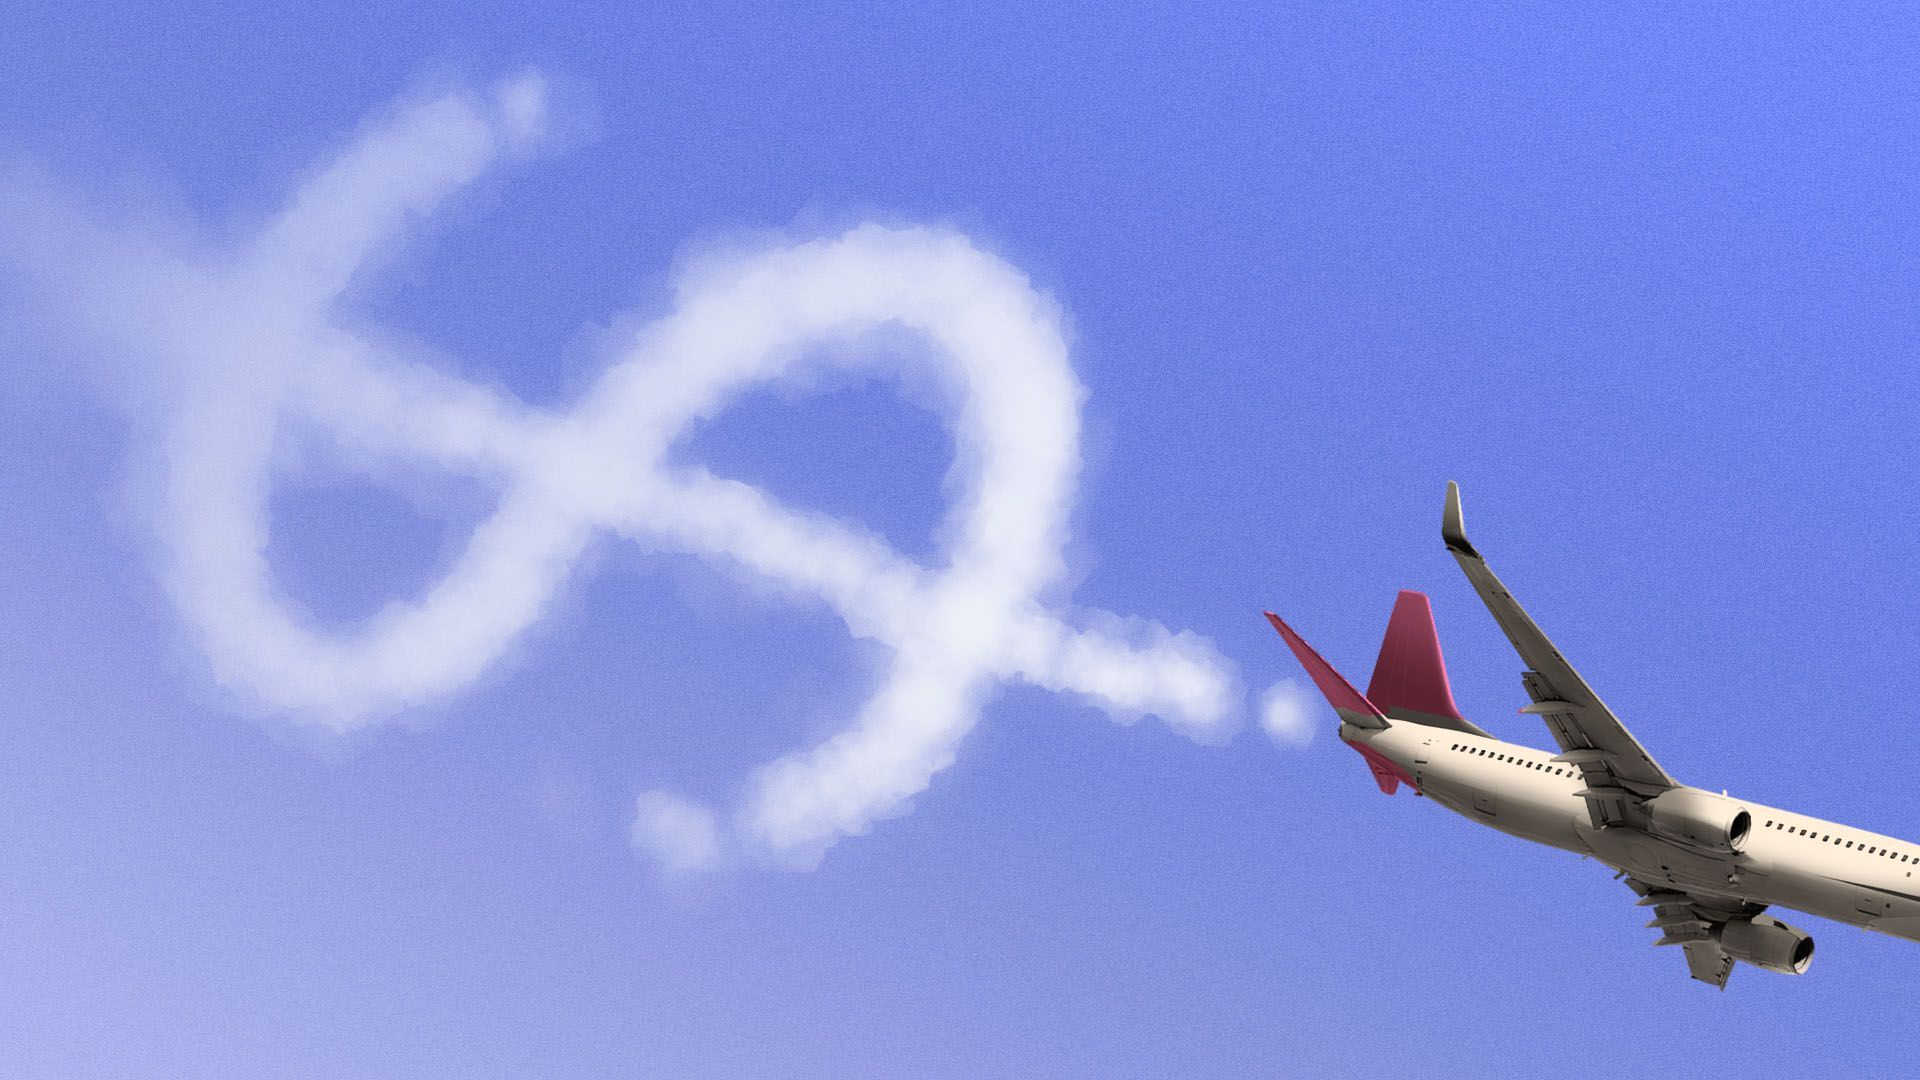 Illustration of descending plane with a dollar sign vapor trail